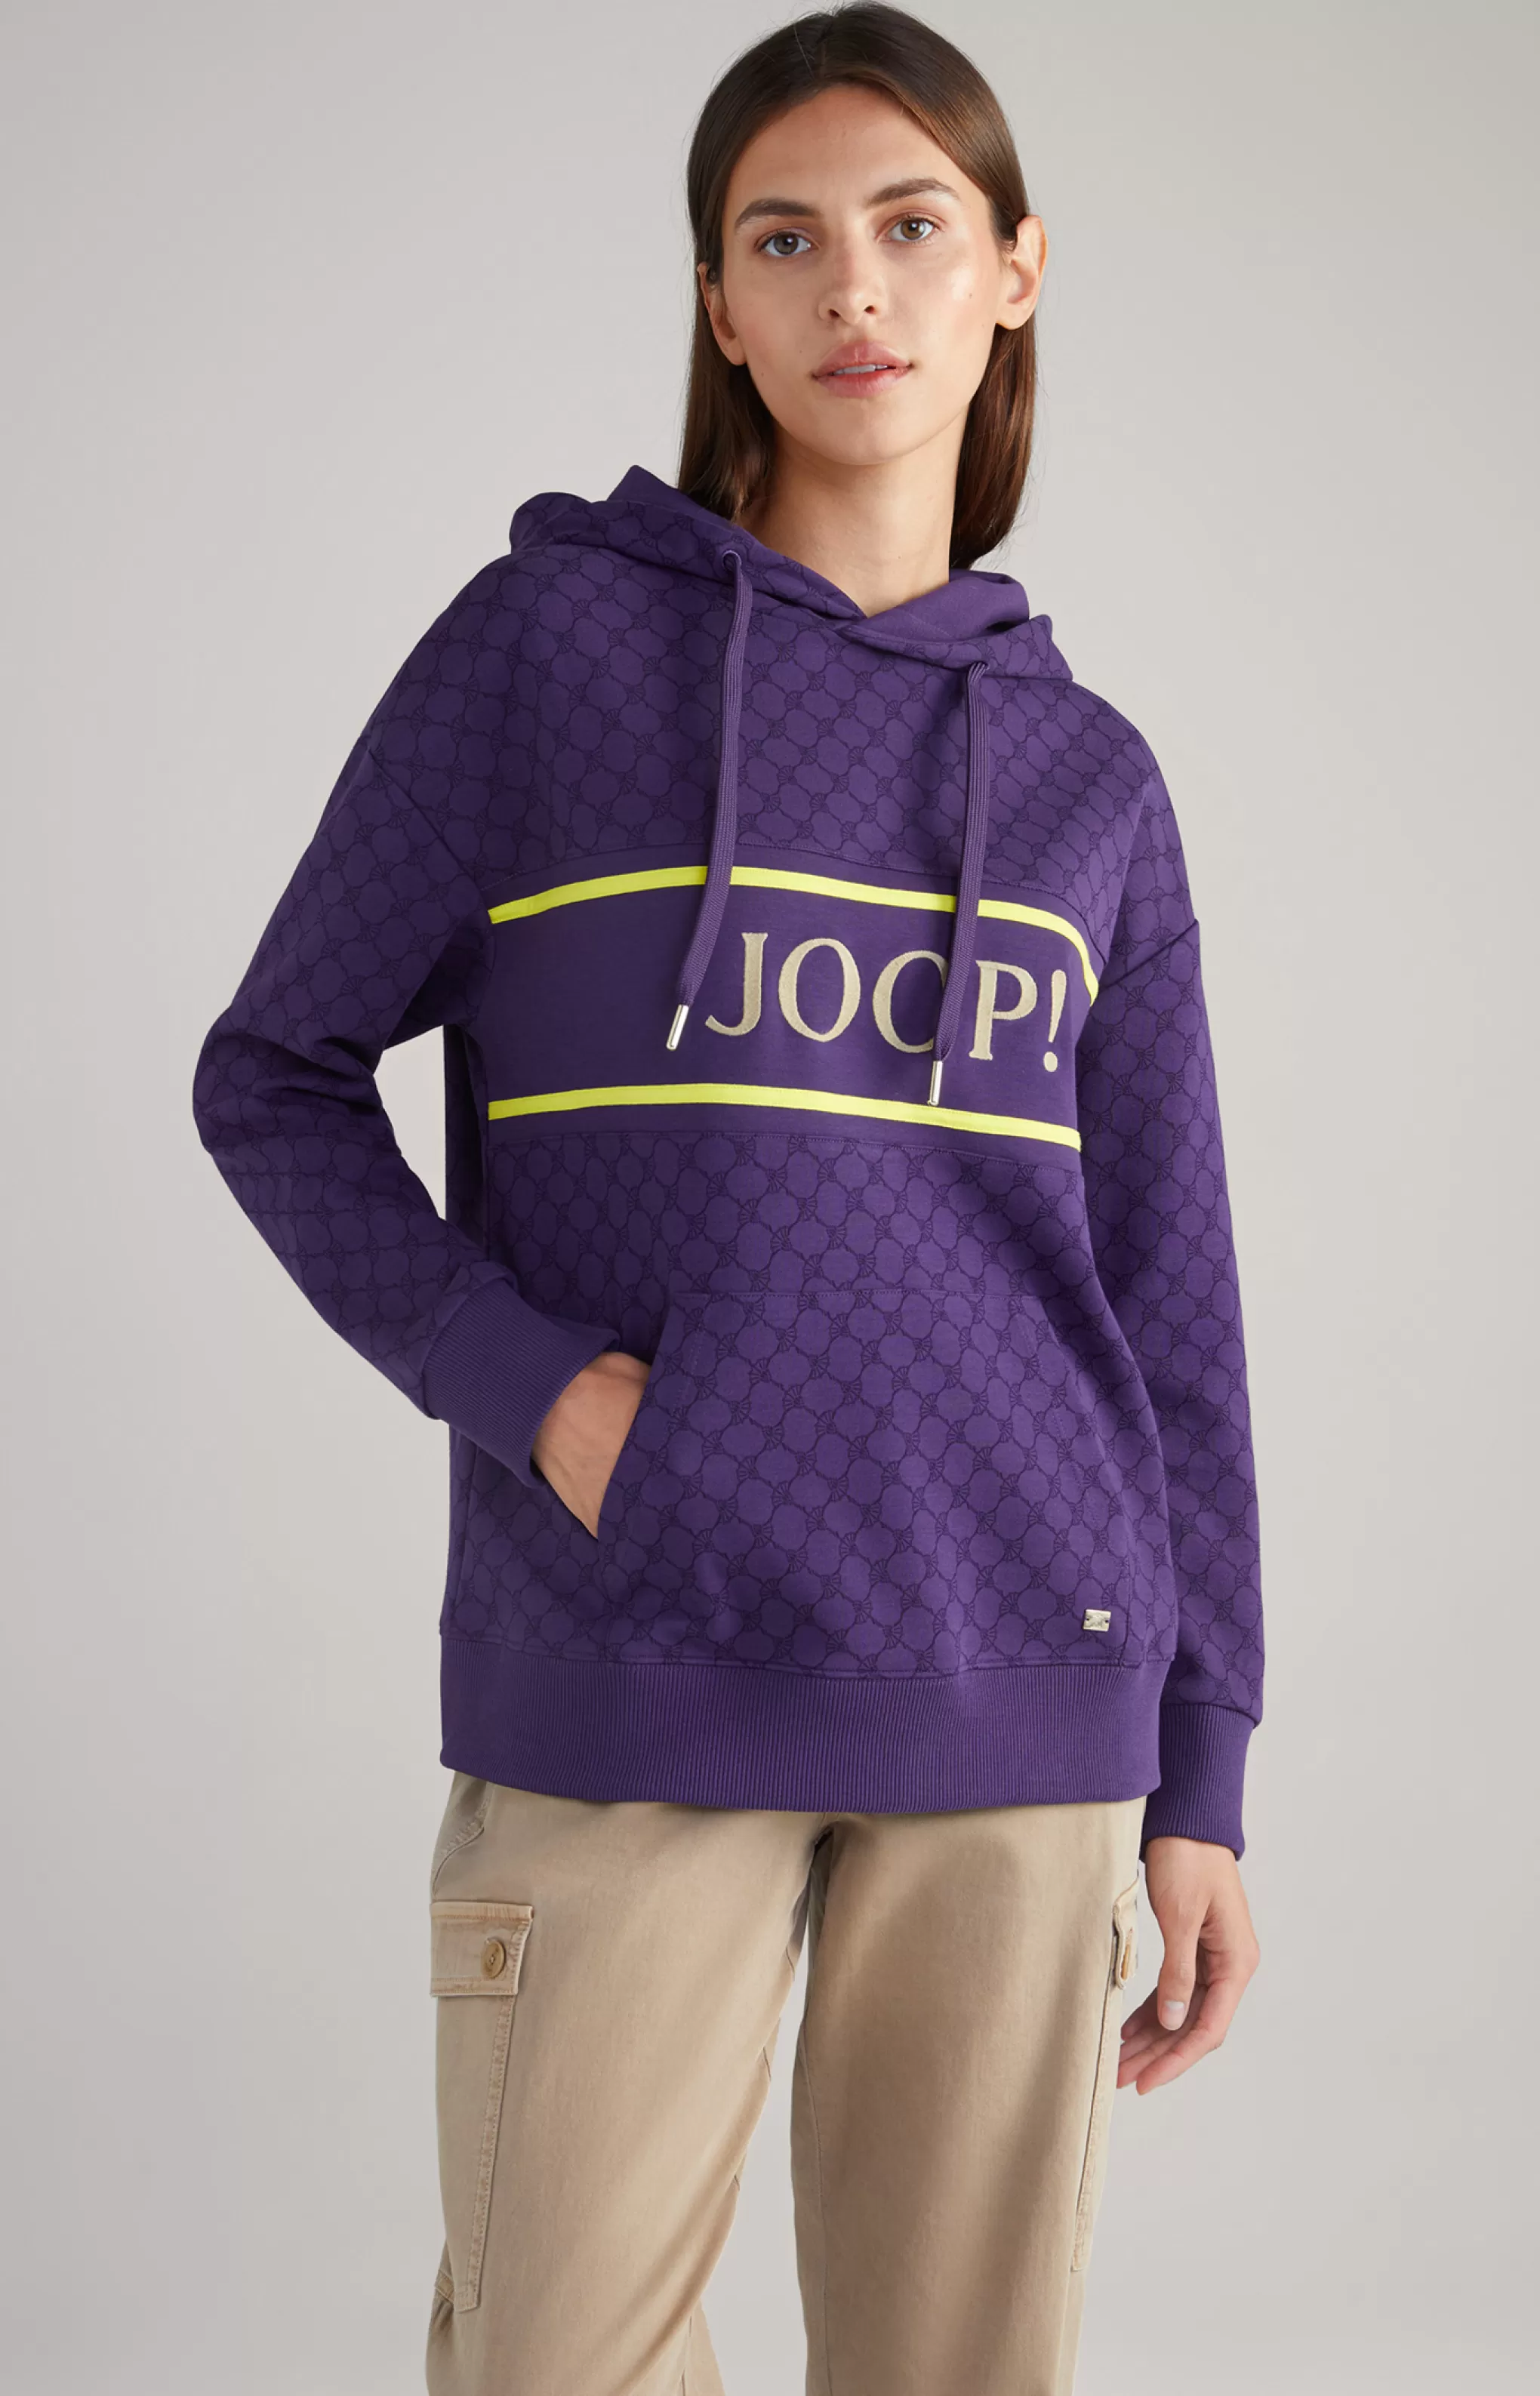 Shirts & Sweats | Clothing*JOOP Shirts & Sweats | Clothing Hoodie in Purple, Patterned